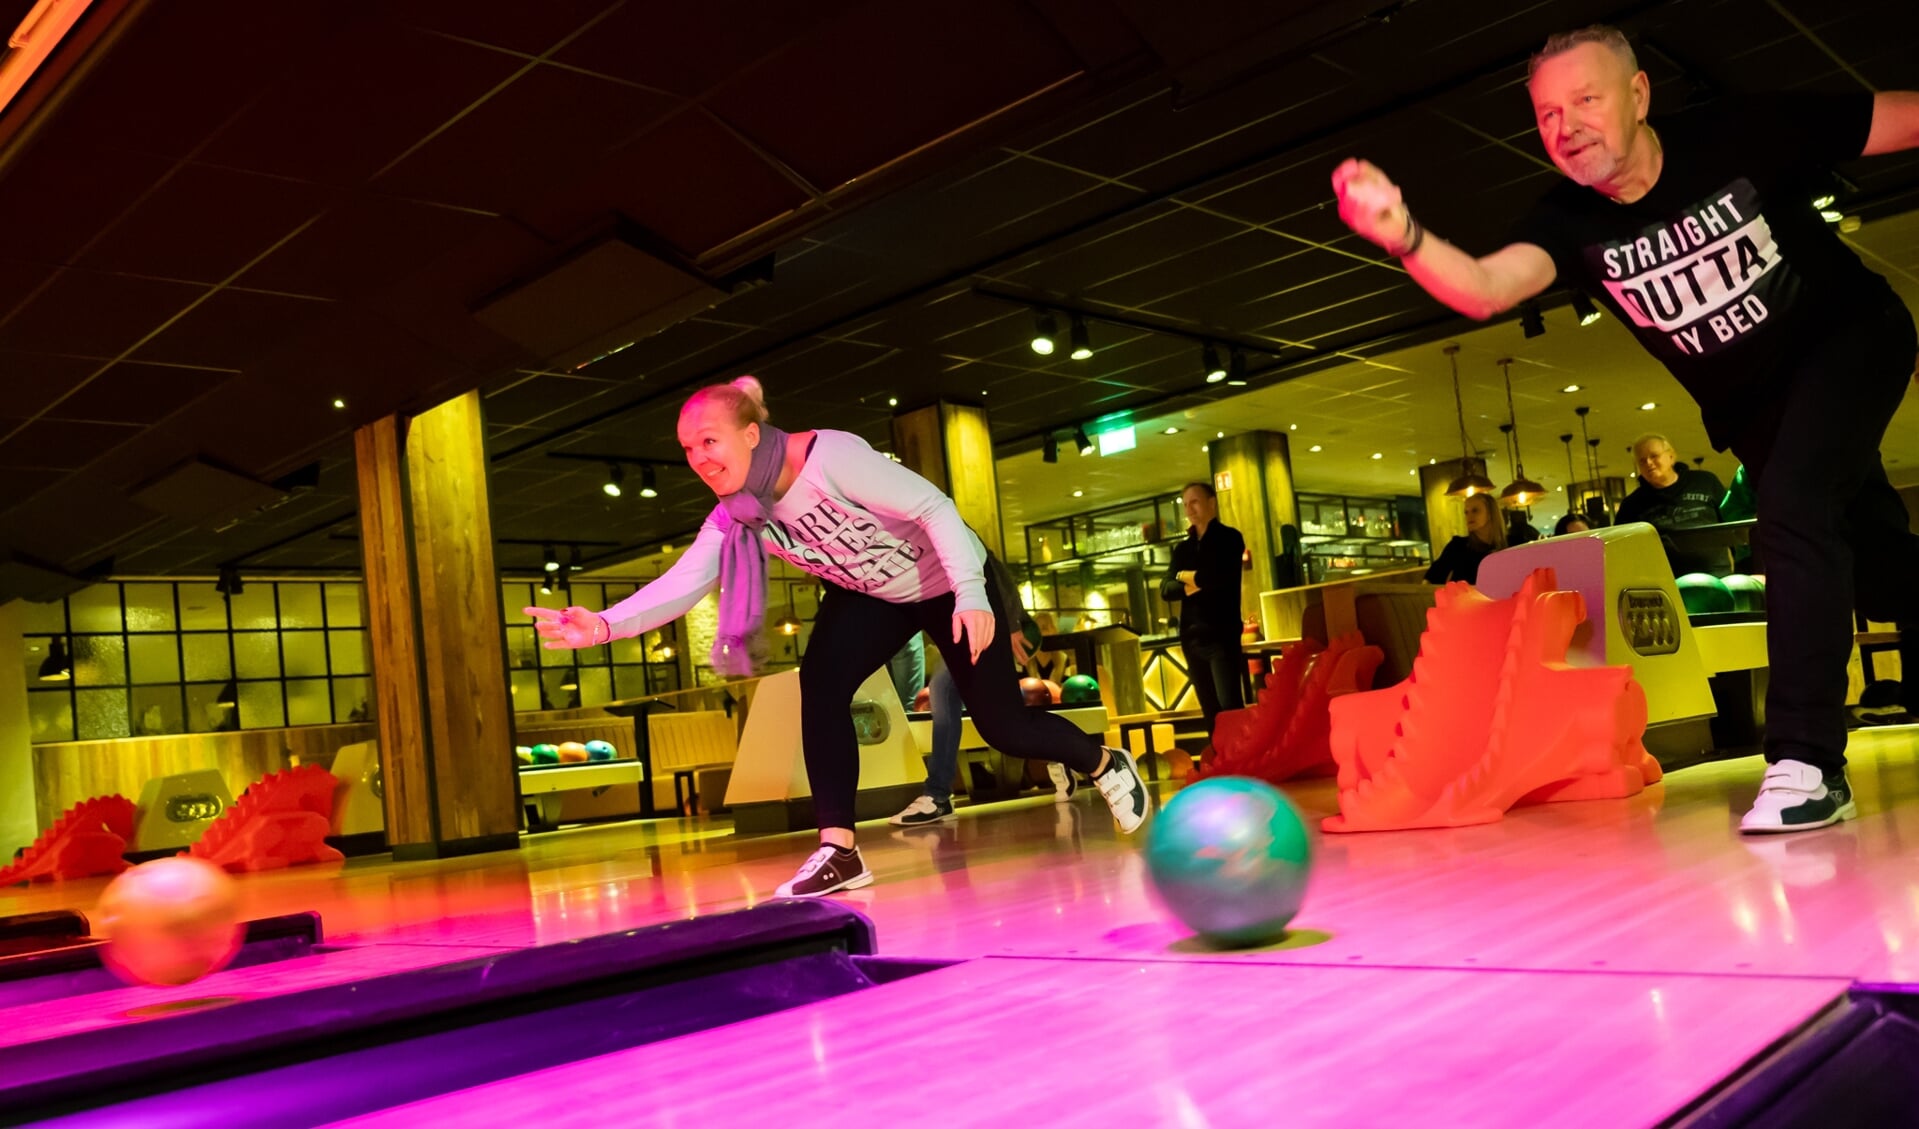 Maak kennis met Bowlingvereniging Hoorn in Bowlingcentrum Franky's in de Huesmolen.